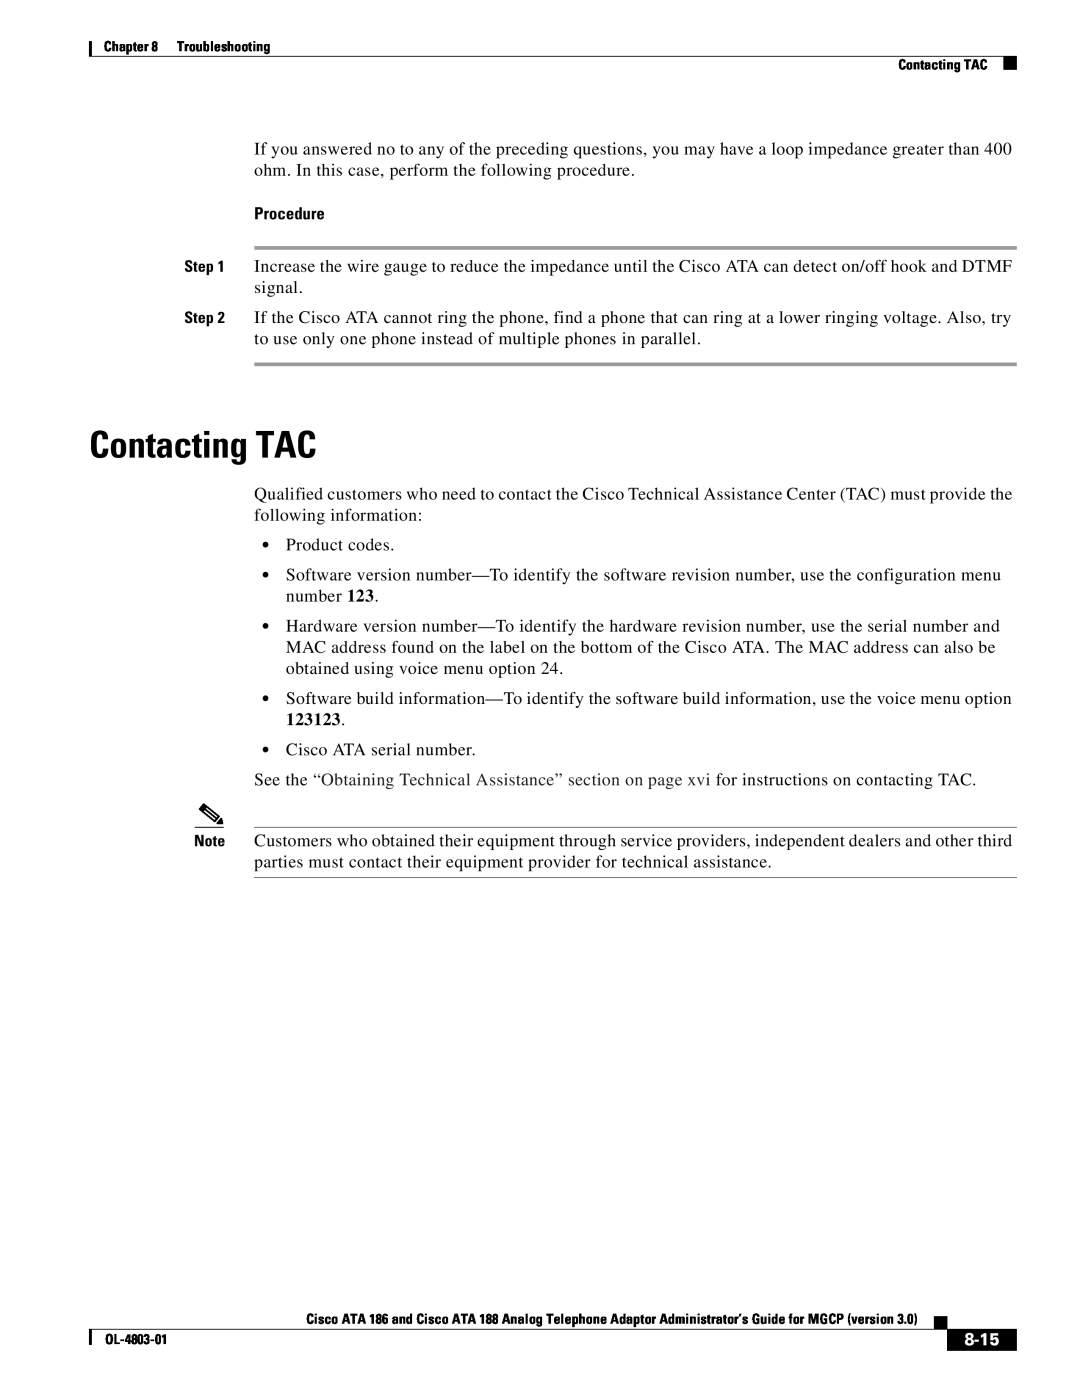 Cisco Systems ATA 188, ATA 186 manual Contacting TAC, 8-15, Procedure 